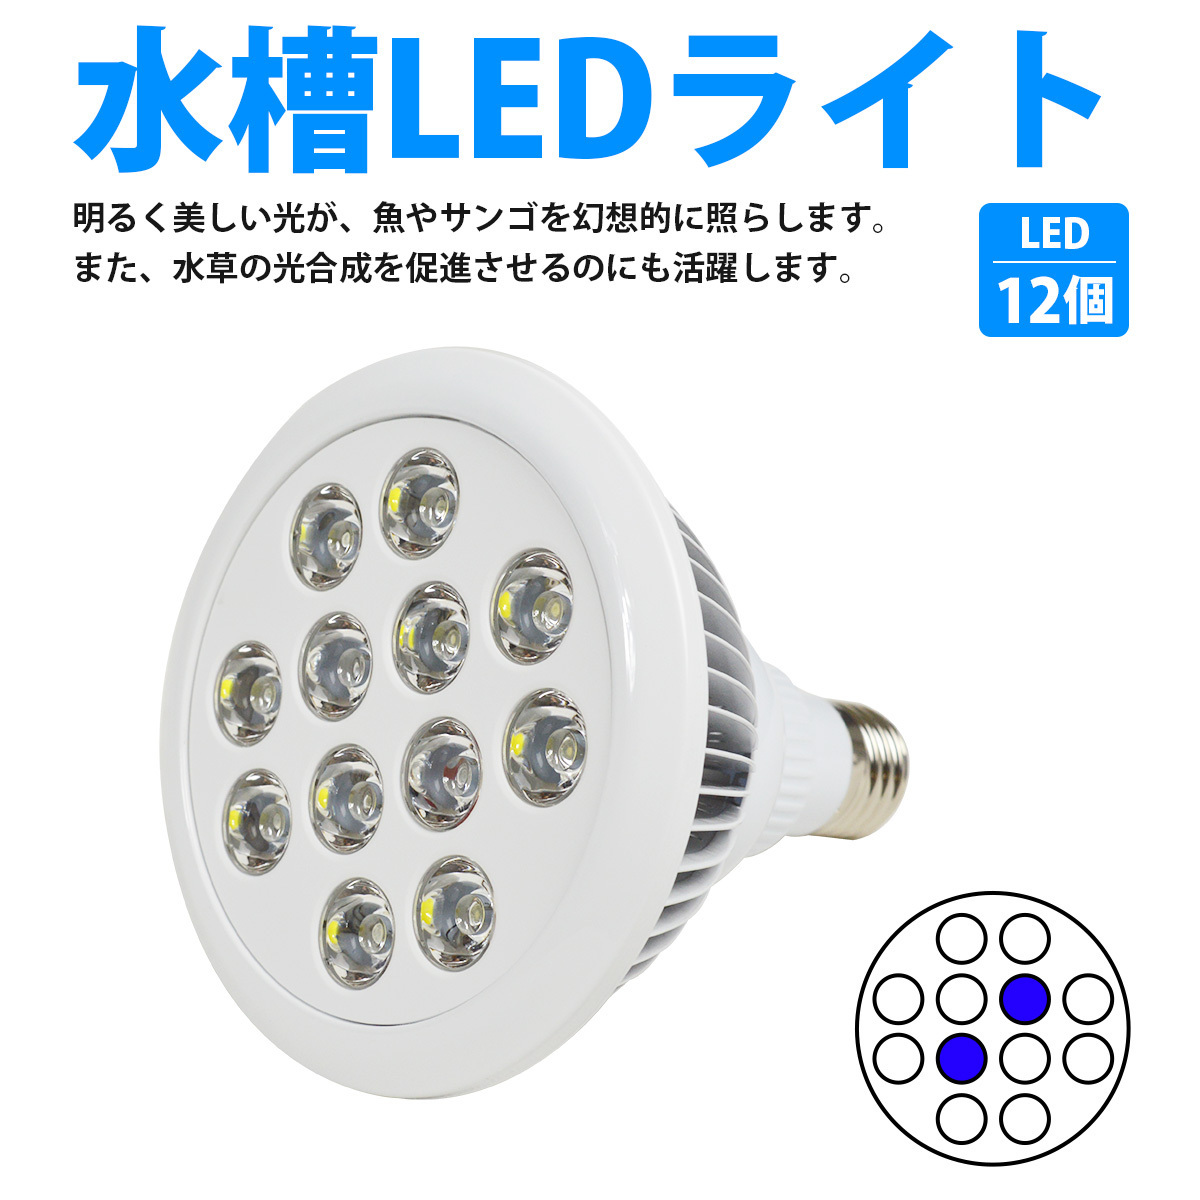 LED 電球 スポットライト 24W(2W×12)白10青2 水槽 照明 E26 LEDスポットライト 電気 水草 サンゴ 熱帯魚 観賞魚 植物育成_laqua-b-014-wh-01-a